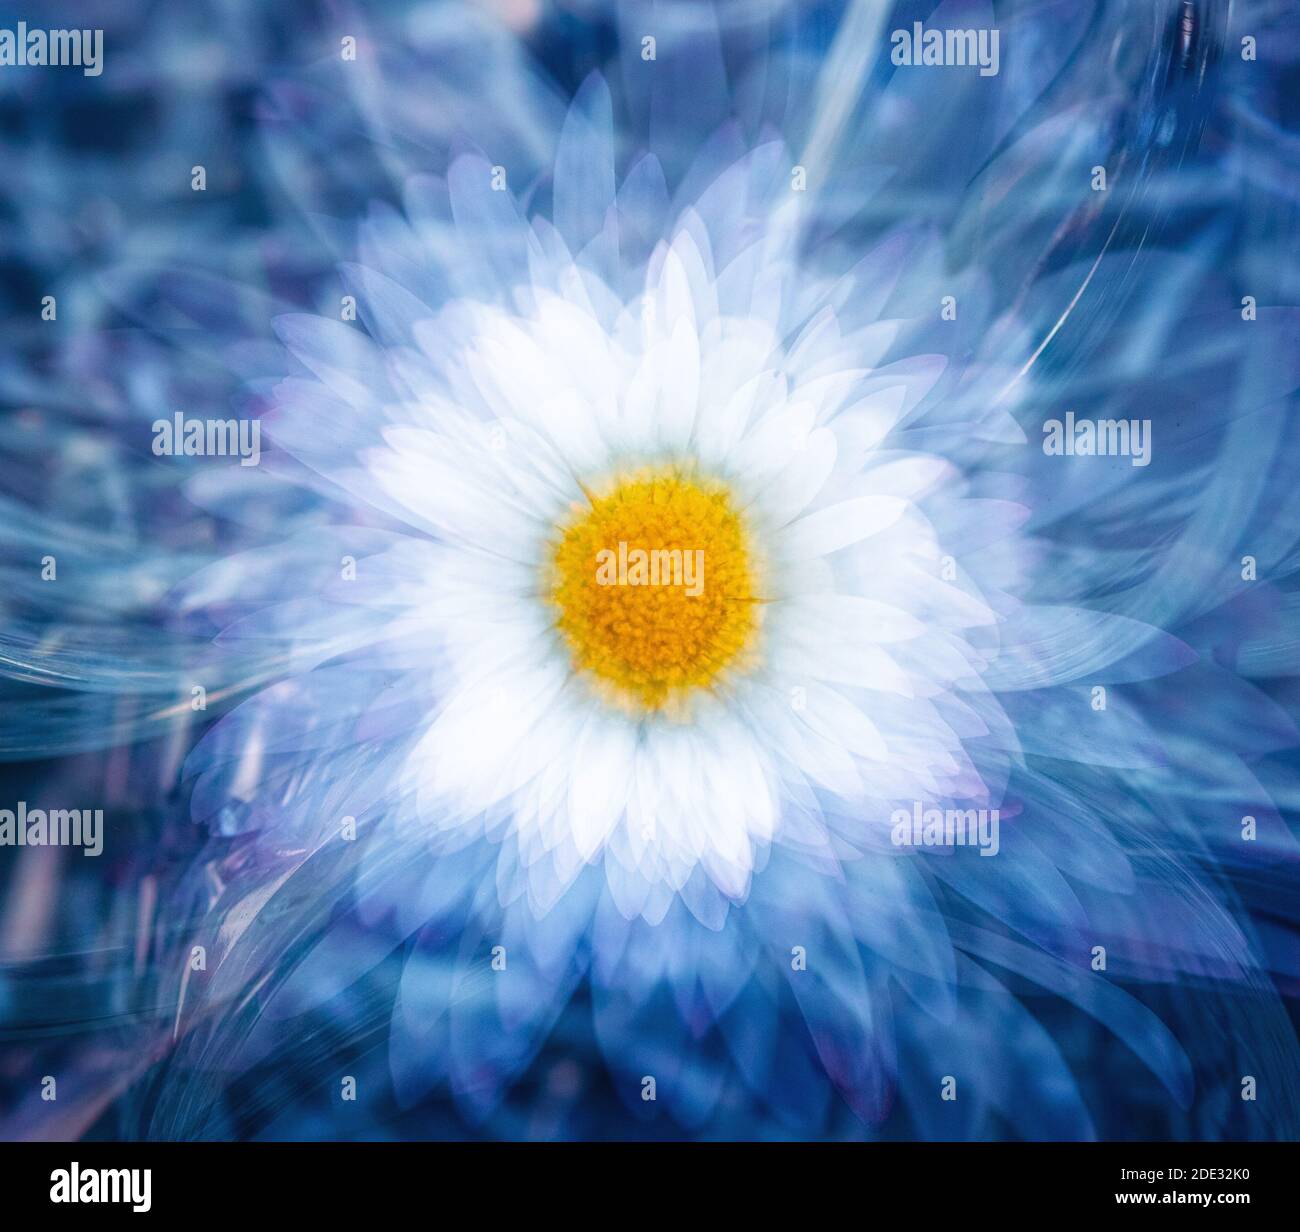 Flower inside a glass. Creative image of a daisy. Stock Photo